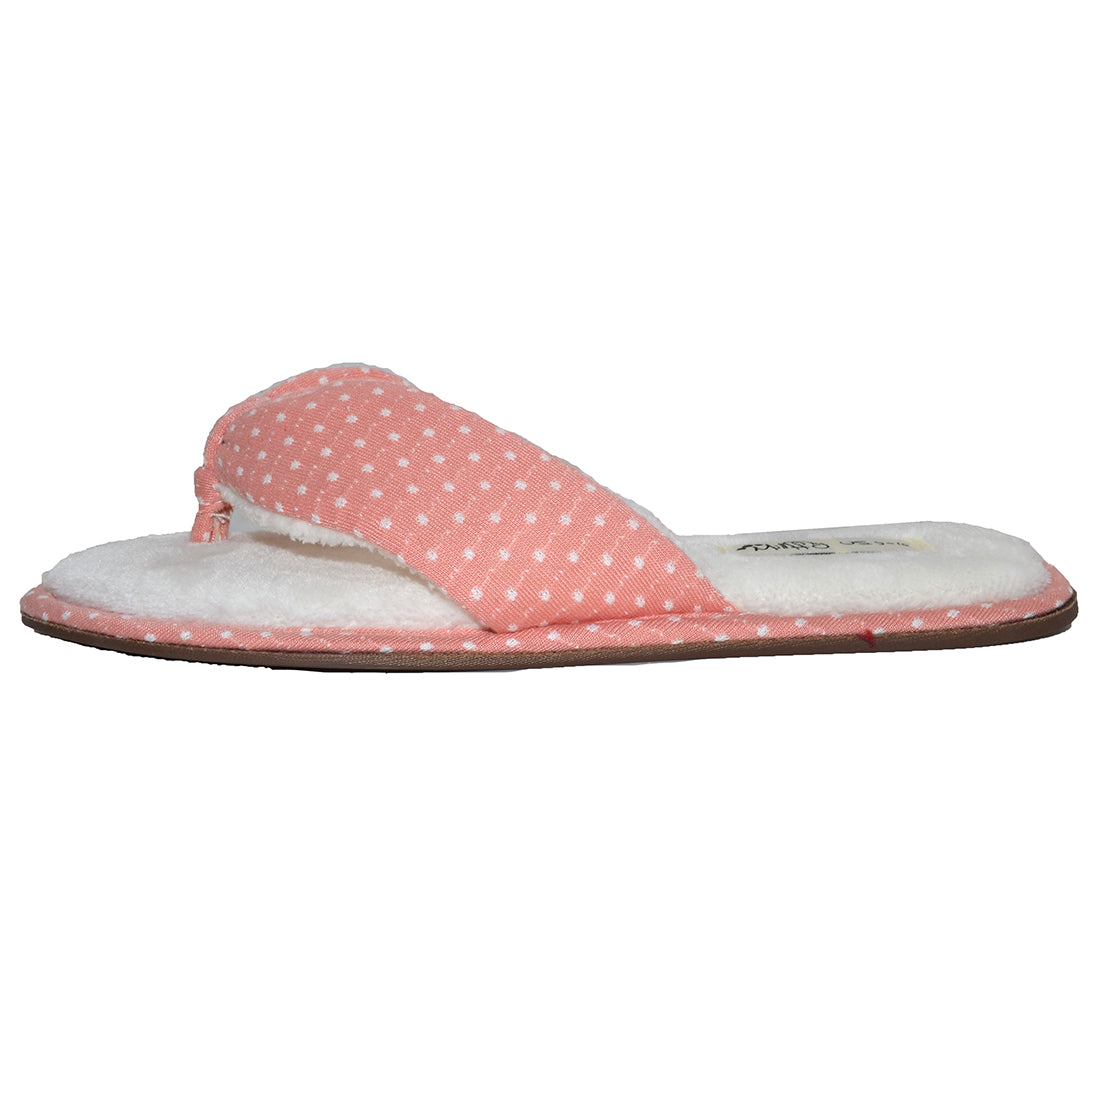 Millffy Cotton Cozy Shearling Thong Slide comfy Women girls Flip Flops Summer Slippers